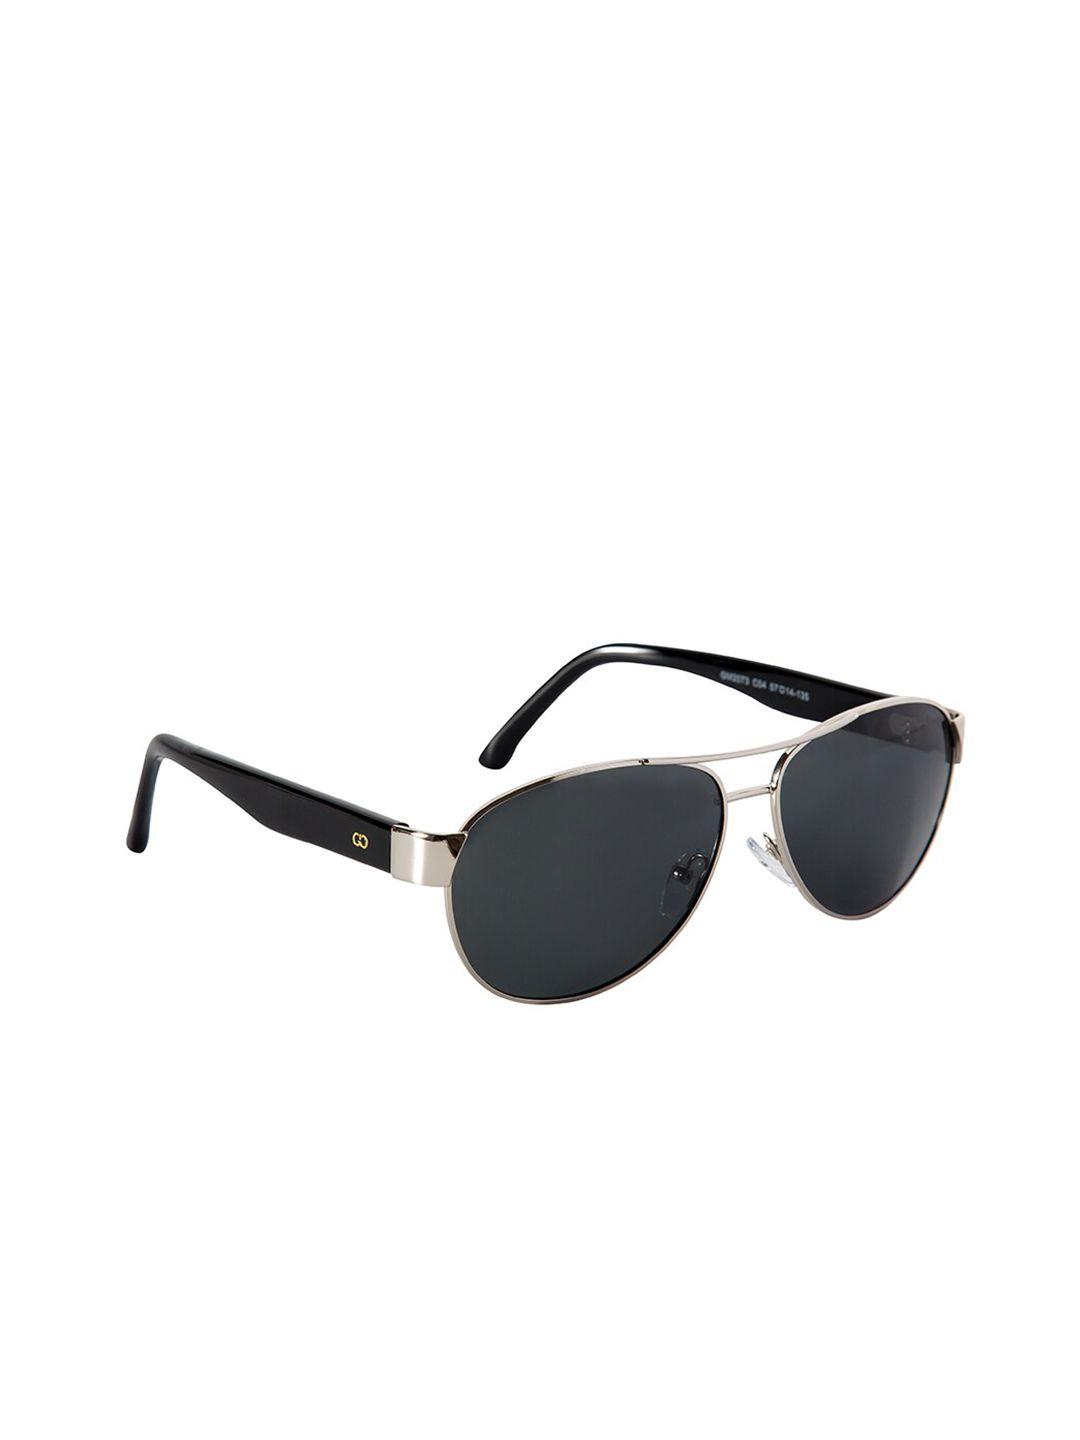 gio collection unisex grey lens & silver-toned full rim aviator sunglasses  gm2073c04-grey